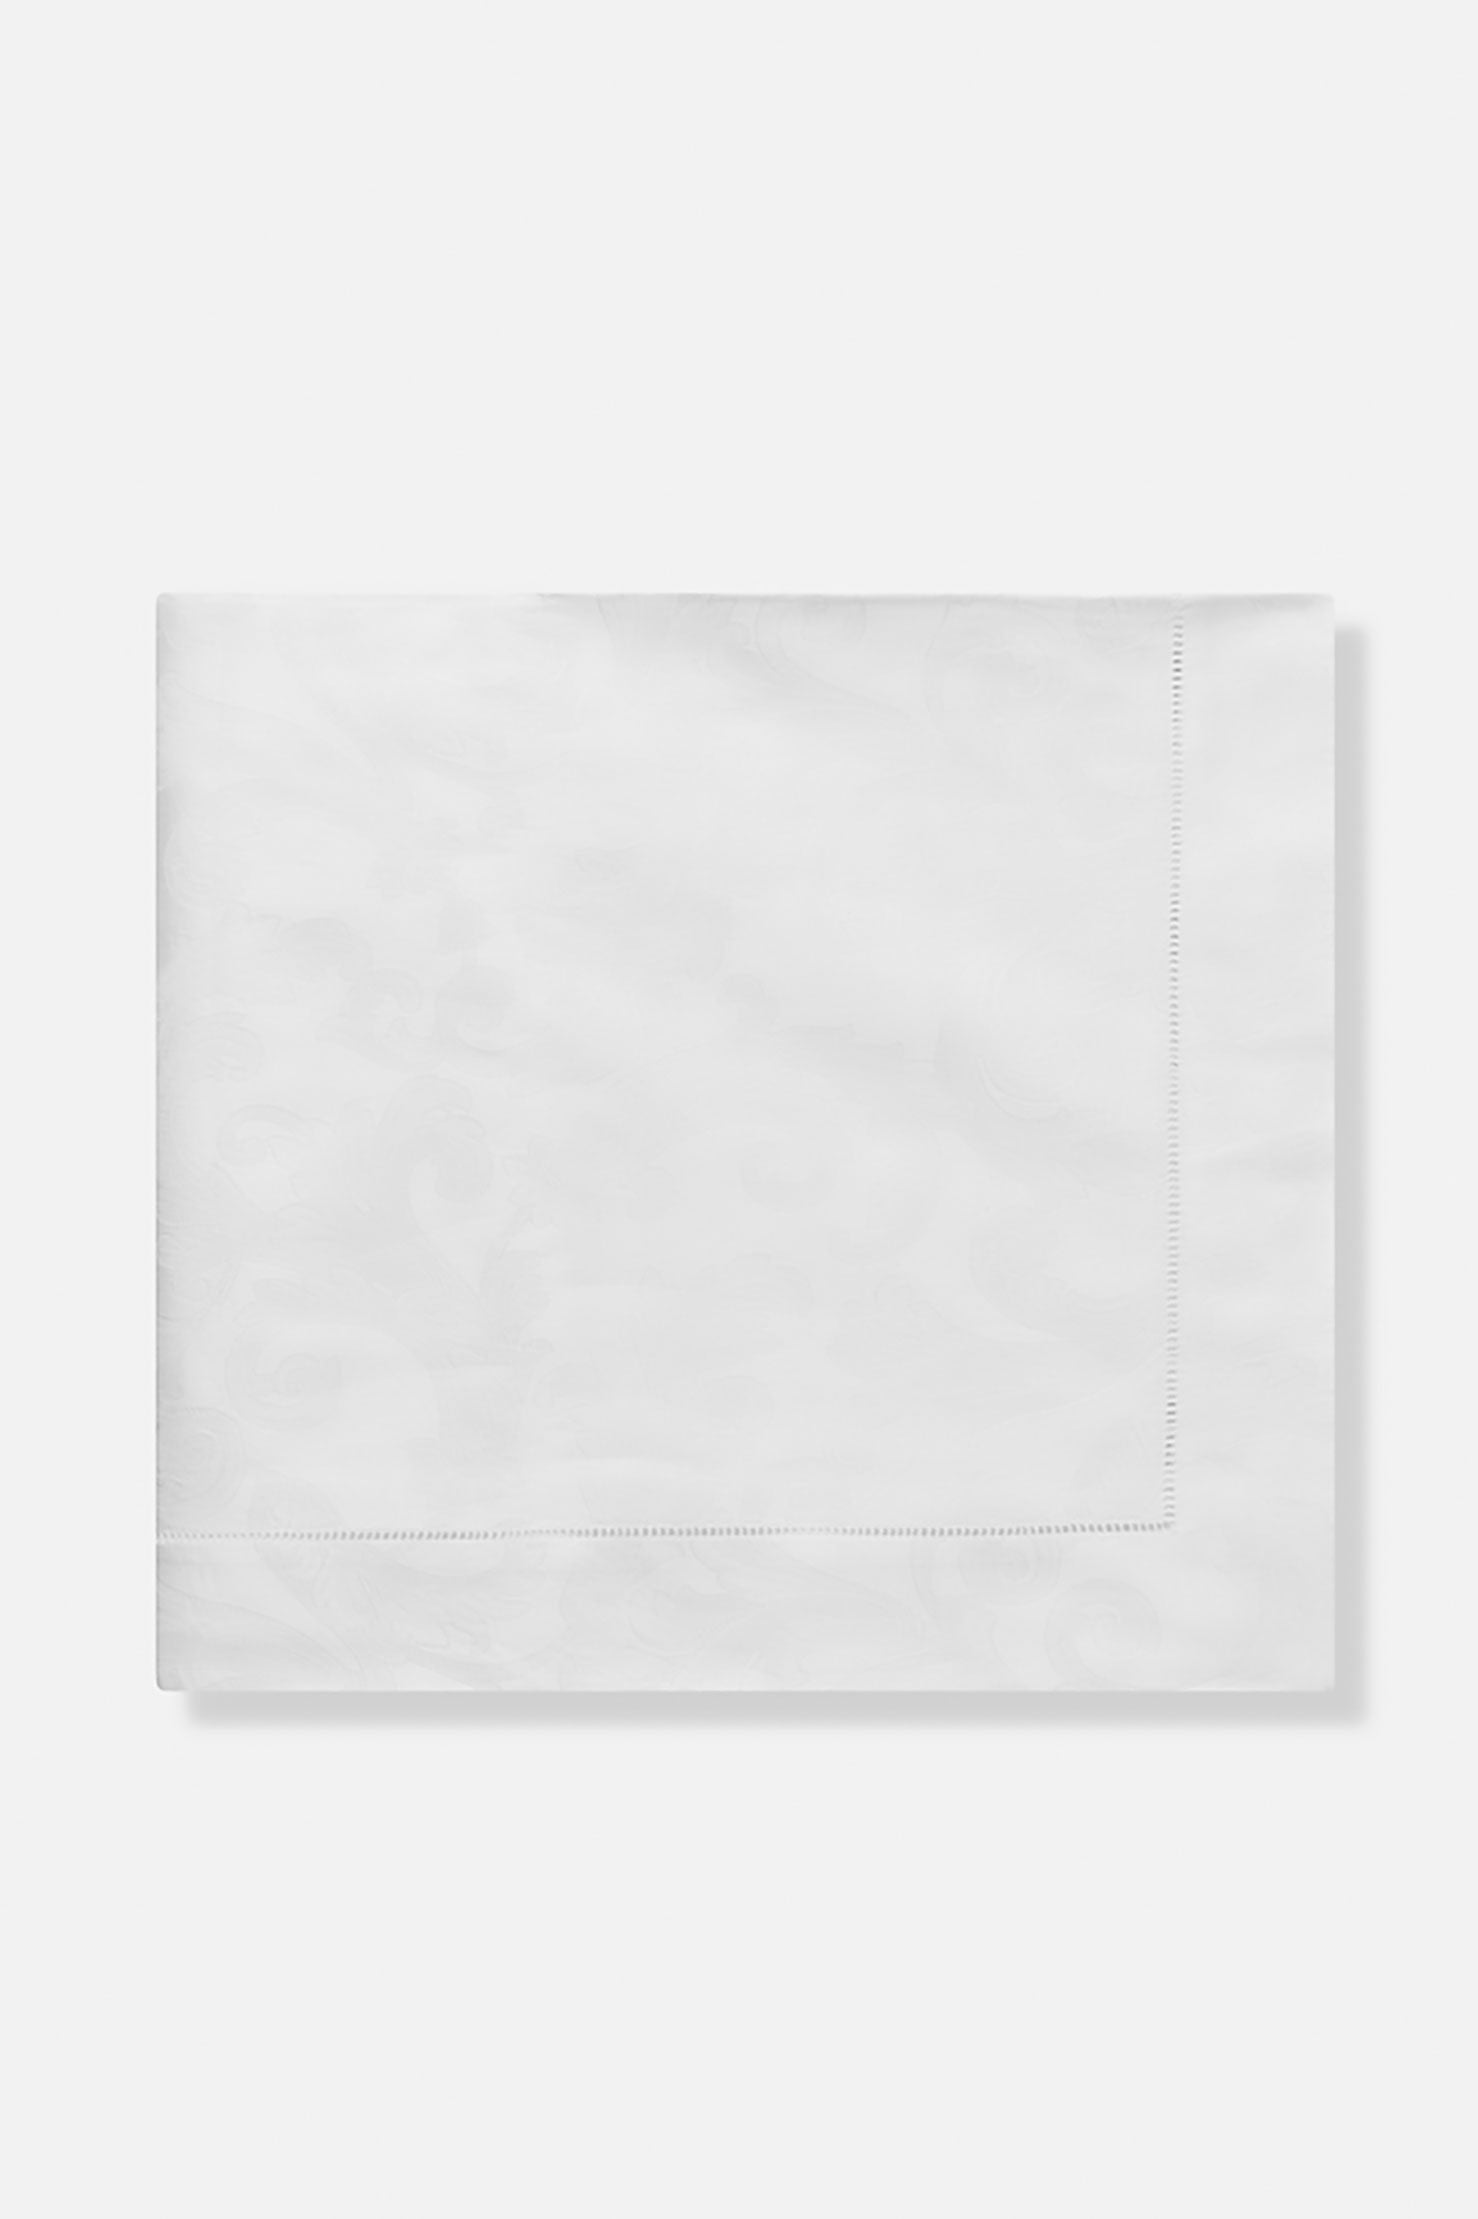 MILANO WHITE JACQUARD TABLE CLOTH 104" X 56" RECTANGLE